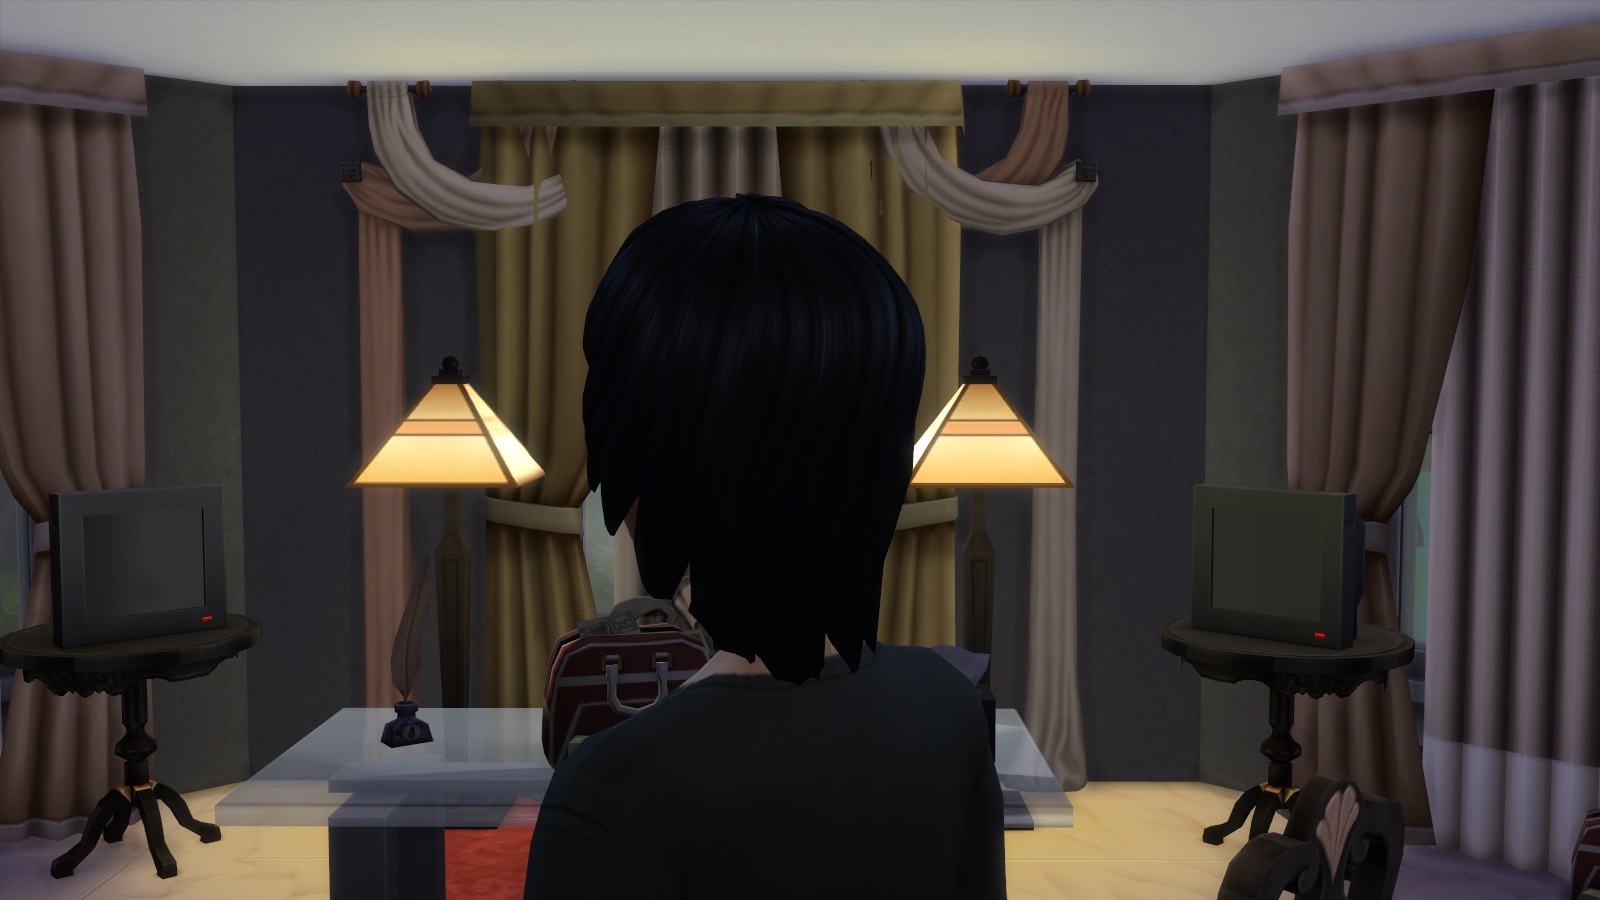 Mod The Sims Davidsims Emo Hair Edit